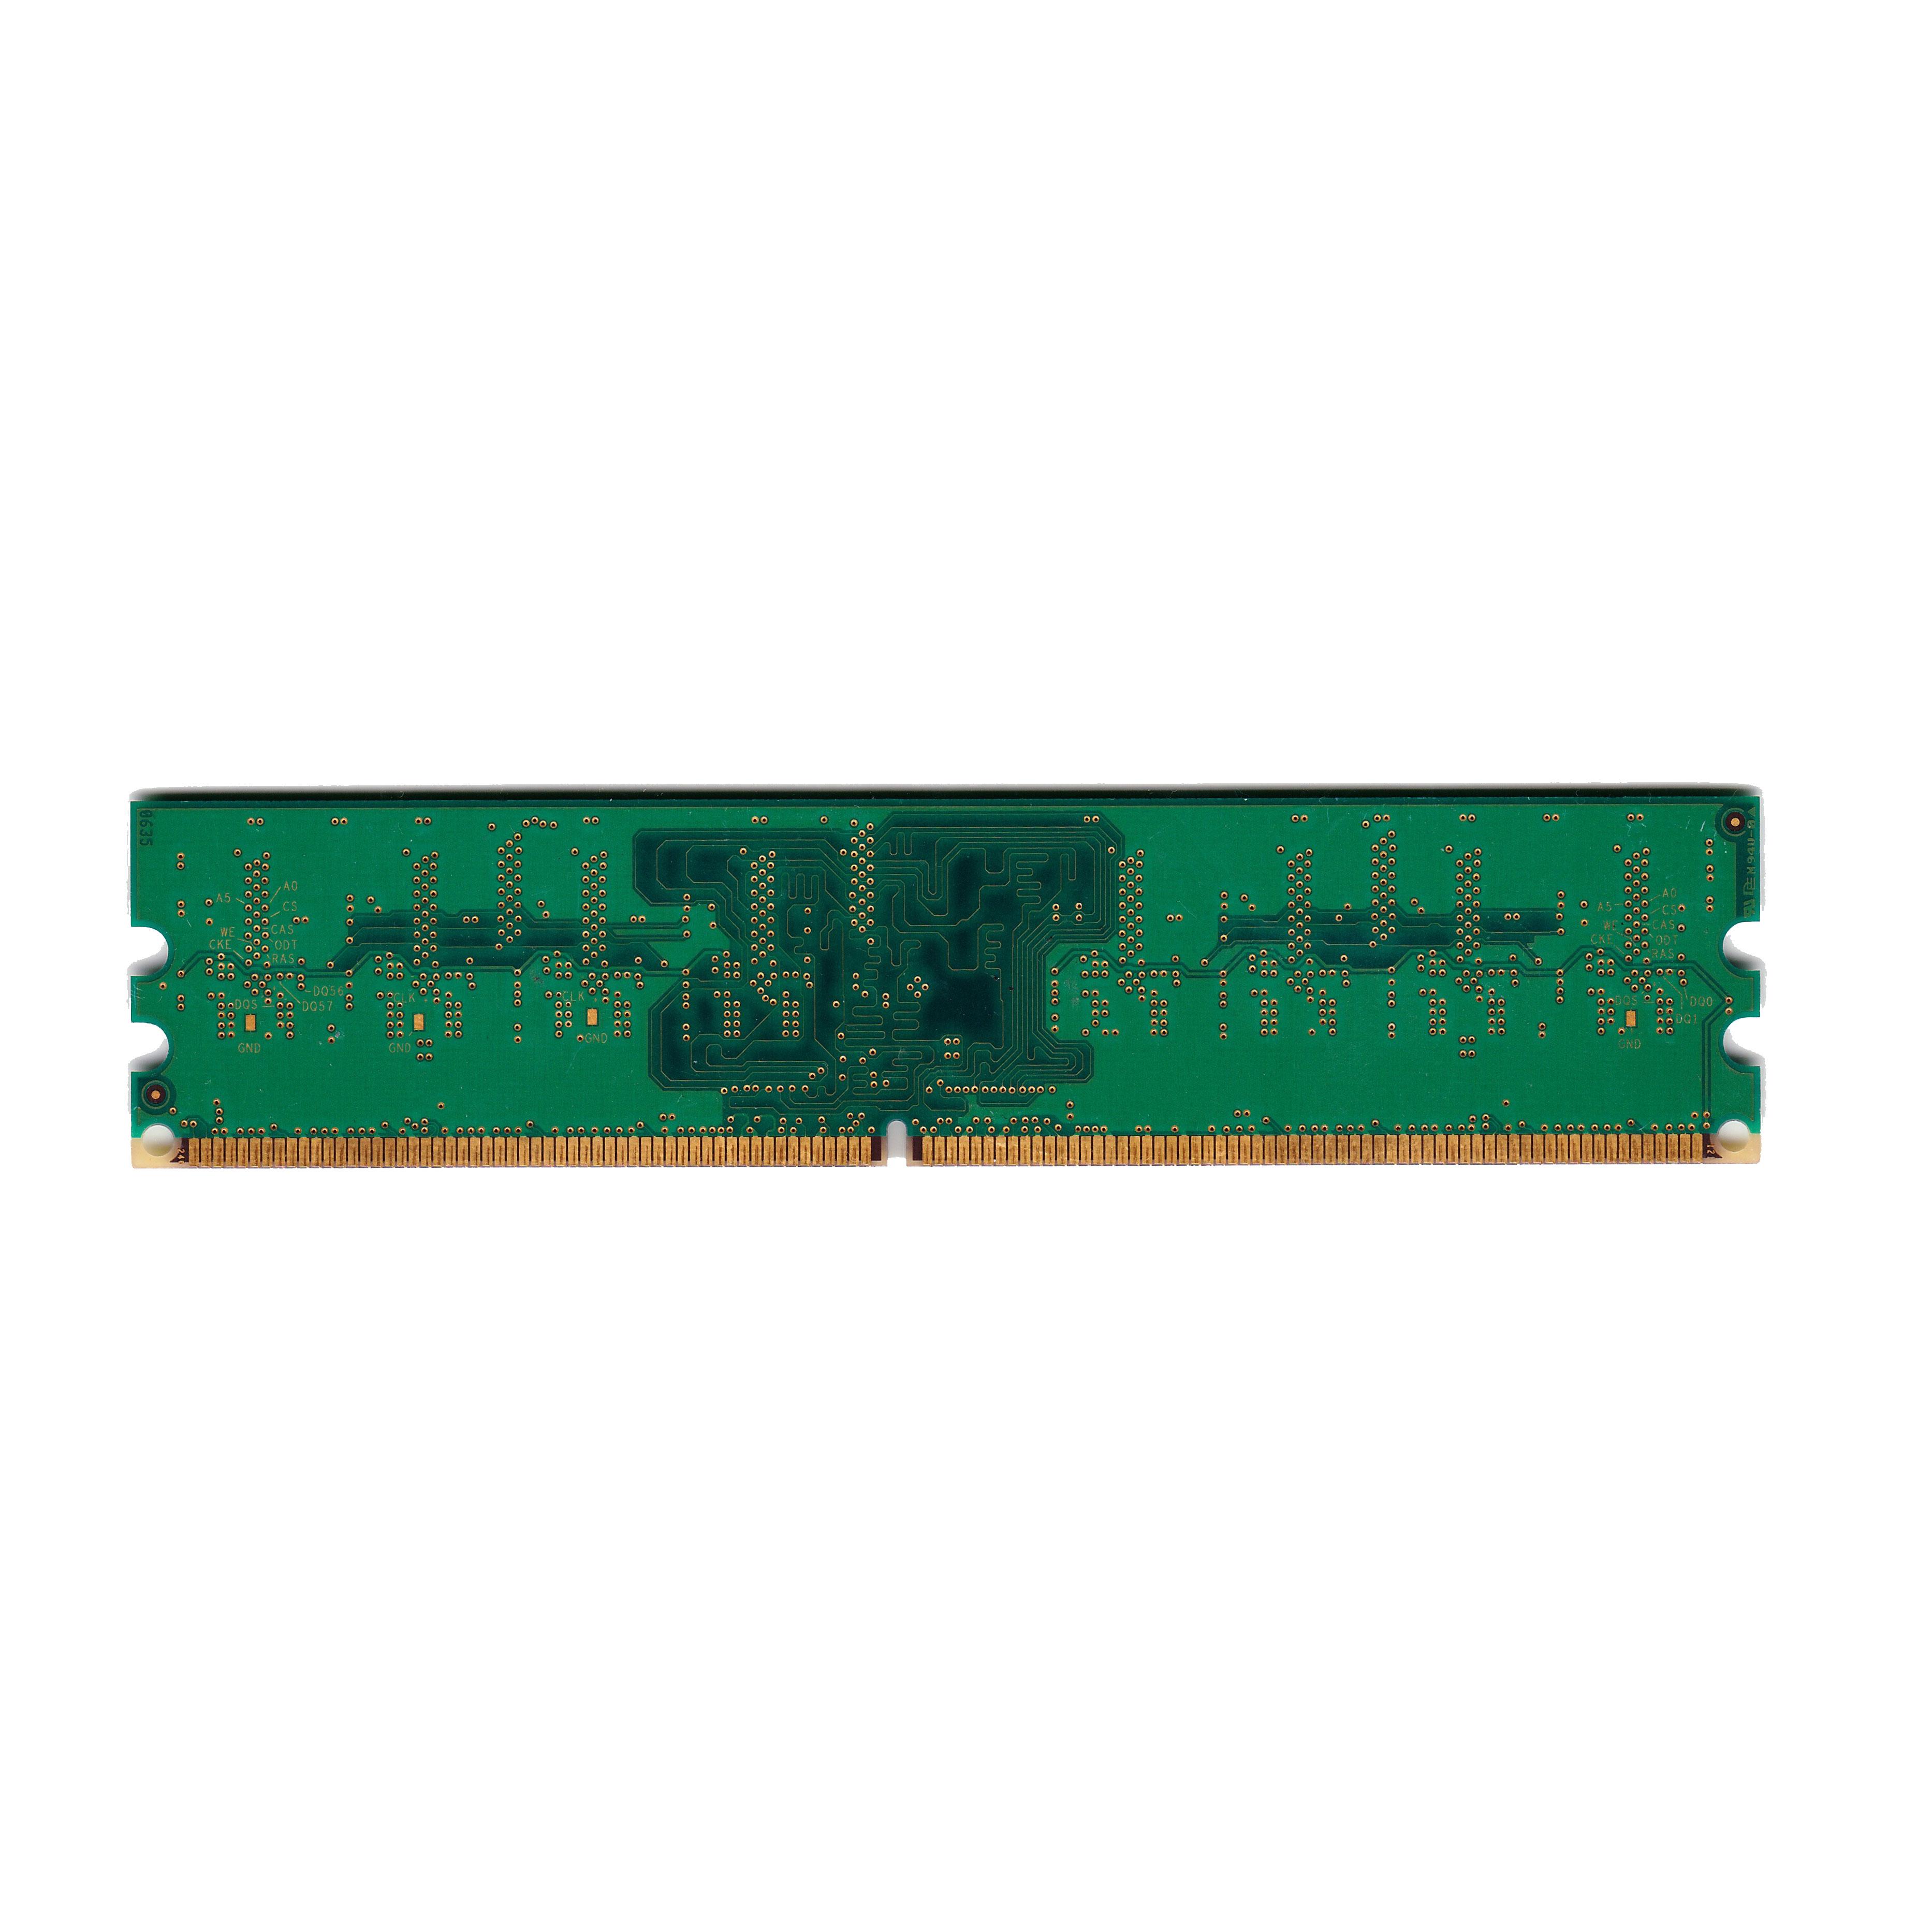 Preowned SAMSUNG 512MB DDR2 PC2 4200U 444 12 03 RAM KOREA - Untested